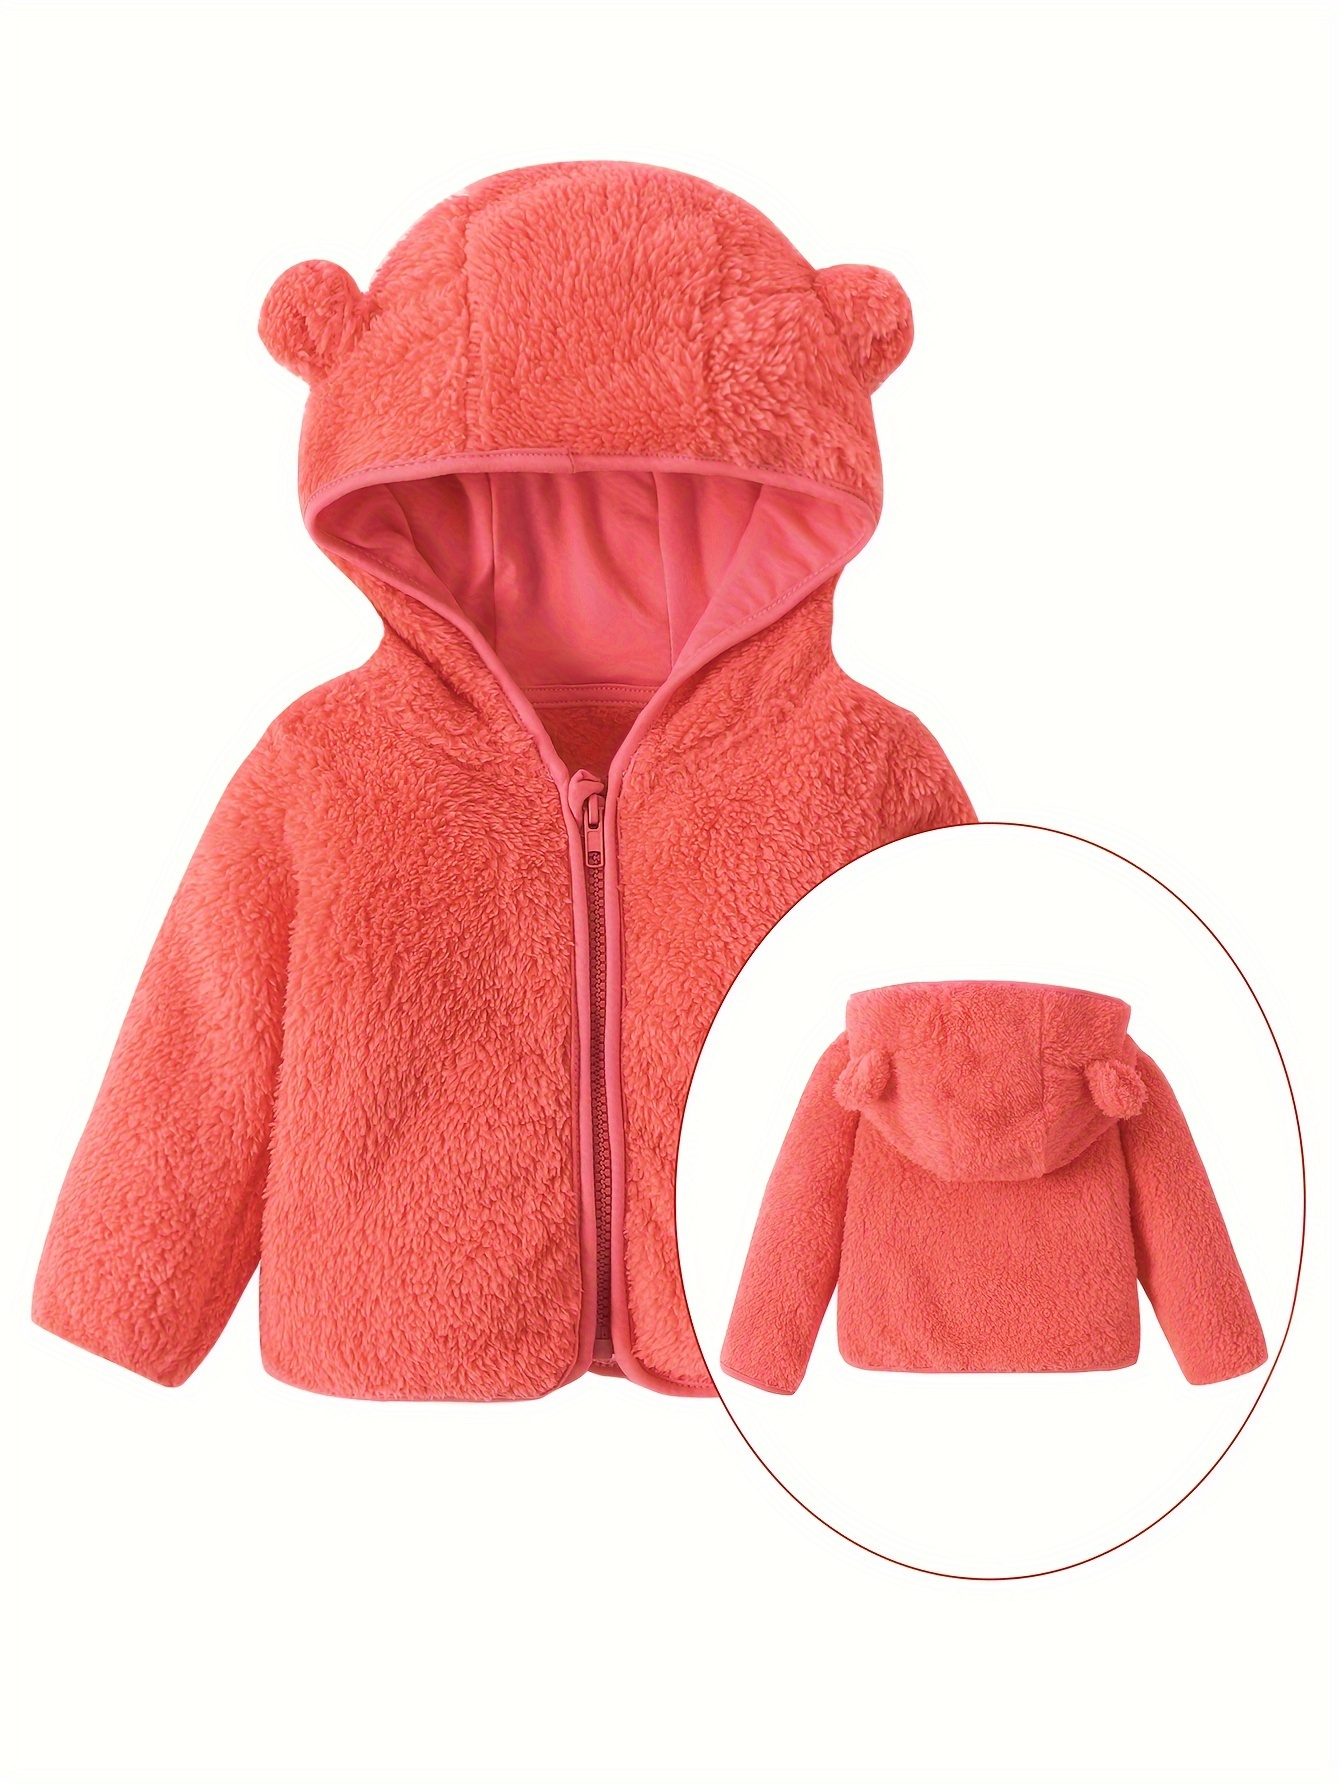 Kids Fleece Teddy Bear Coat Hoodie Winter Hooded Jacket For 2-6years Boy  Girl